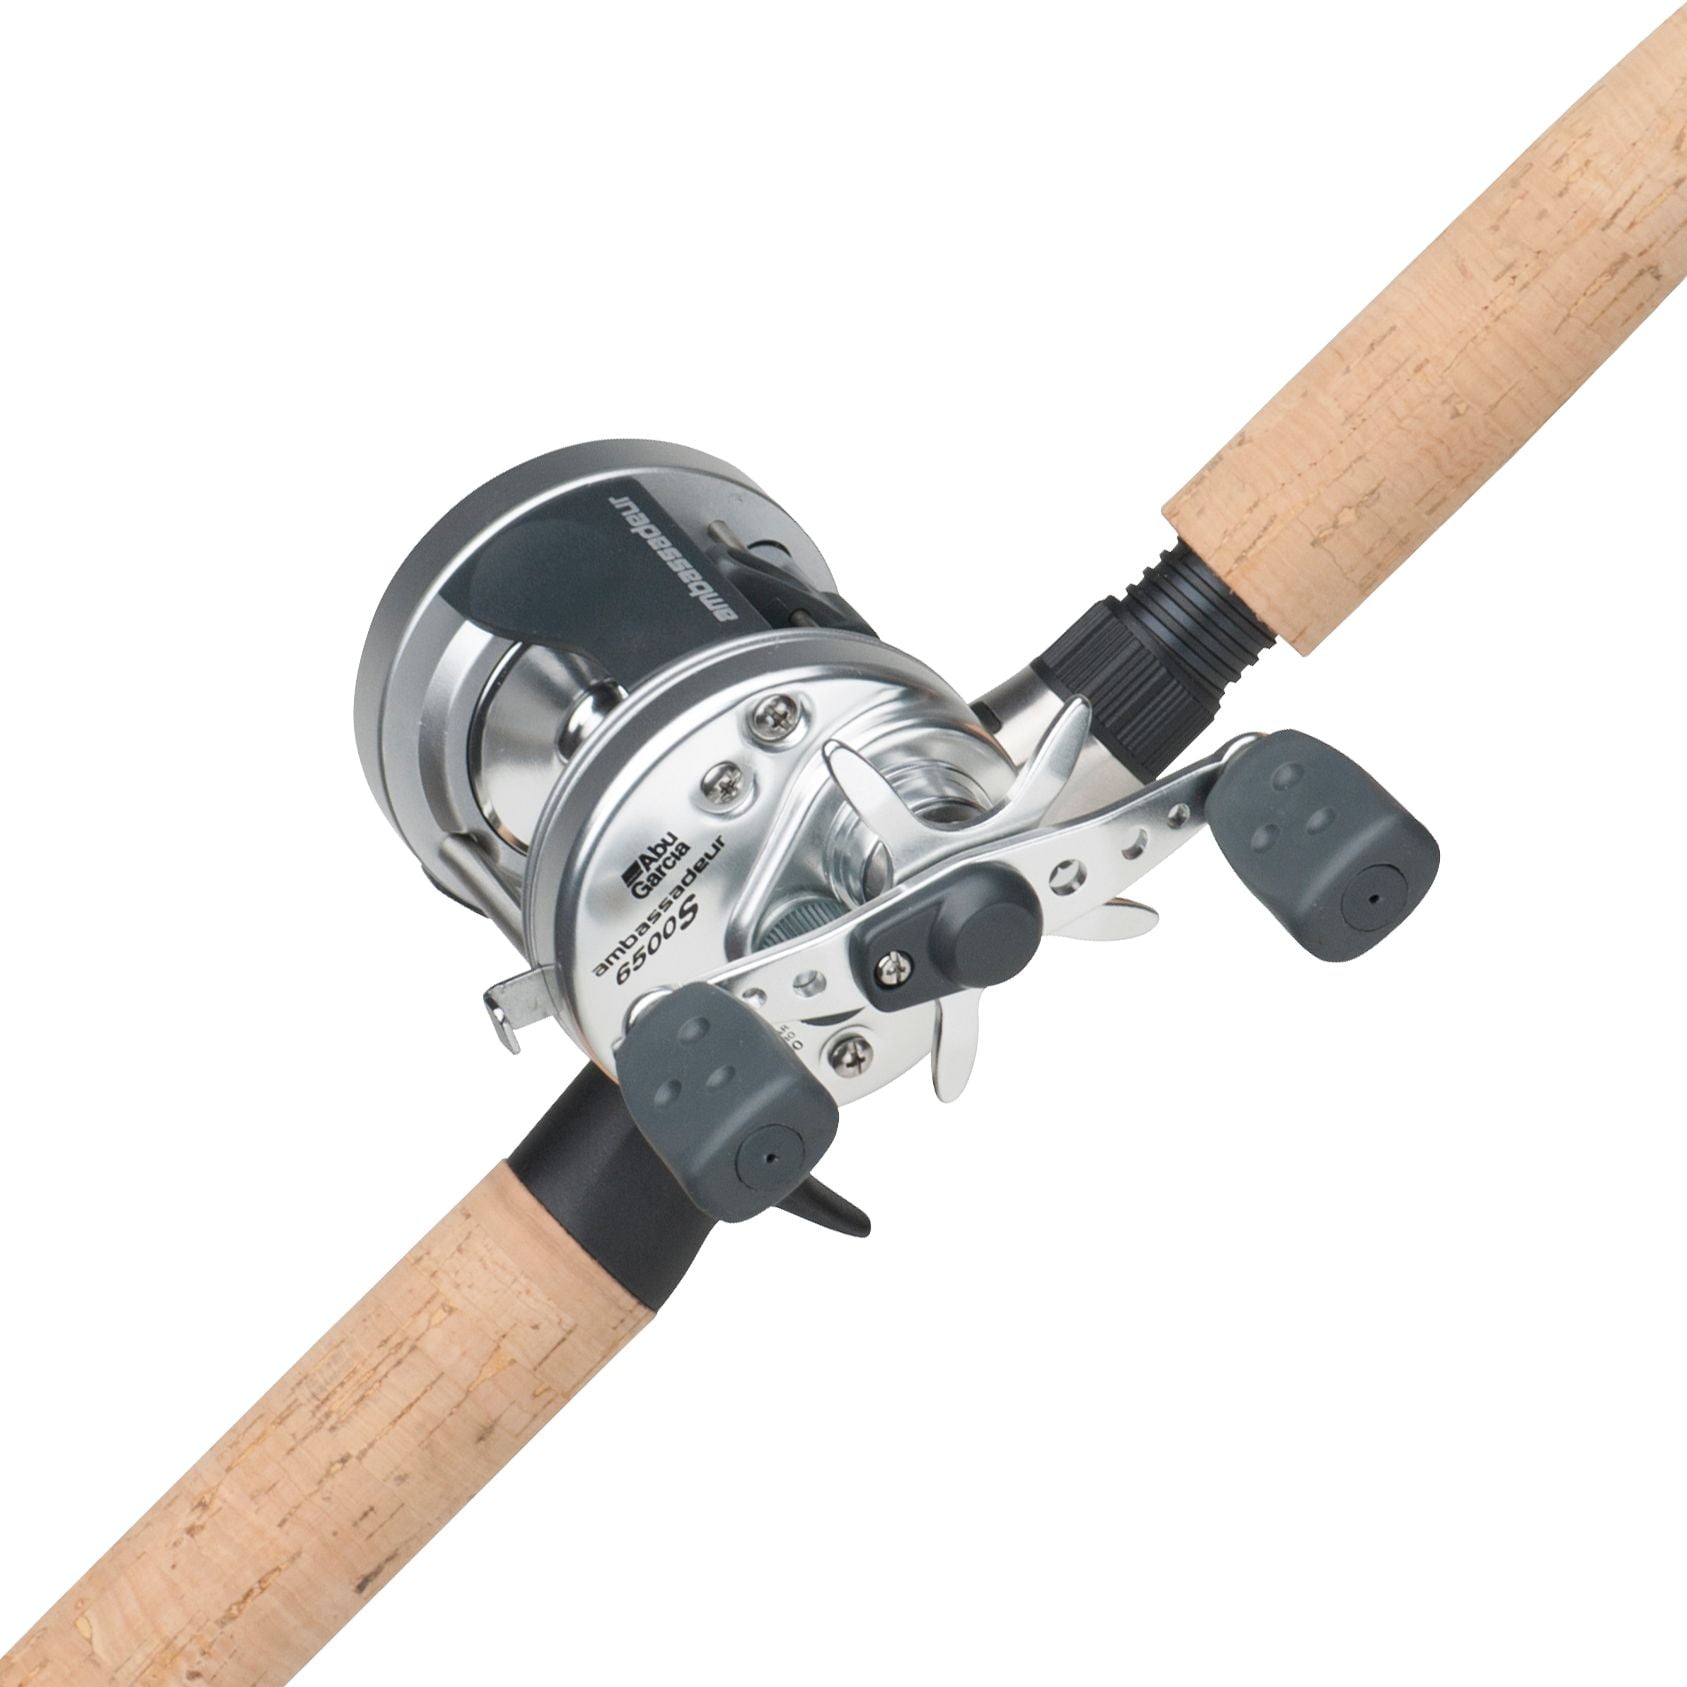 Rod Fishing Spinning Pole Tuff 7' Baitcast Combo Reel For Multi Fishing Species 